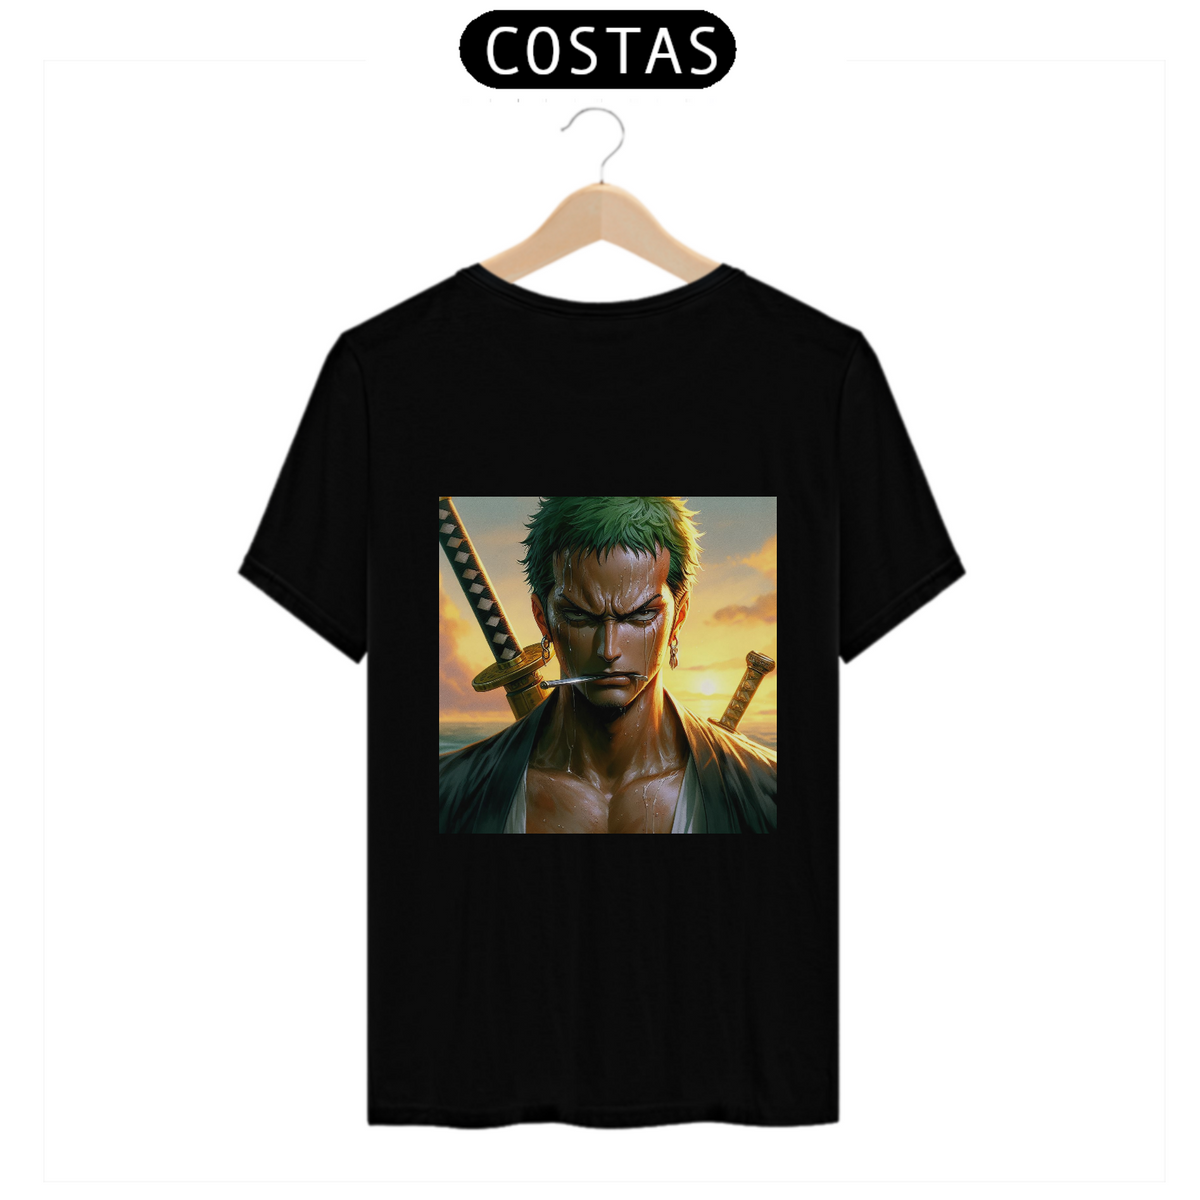 Nome do produto: T-Shirt Roronoa Zoro (One Piece)